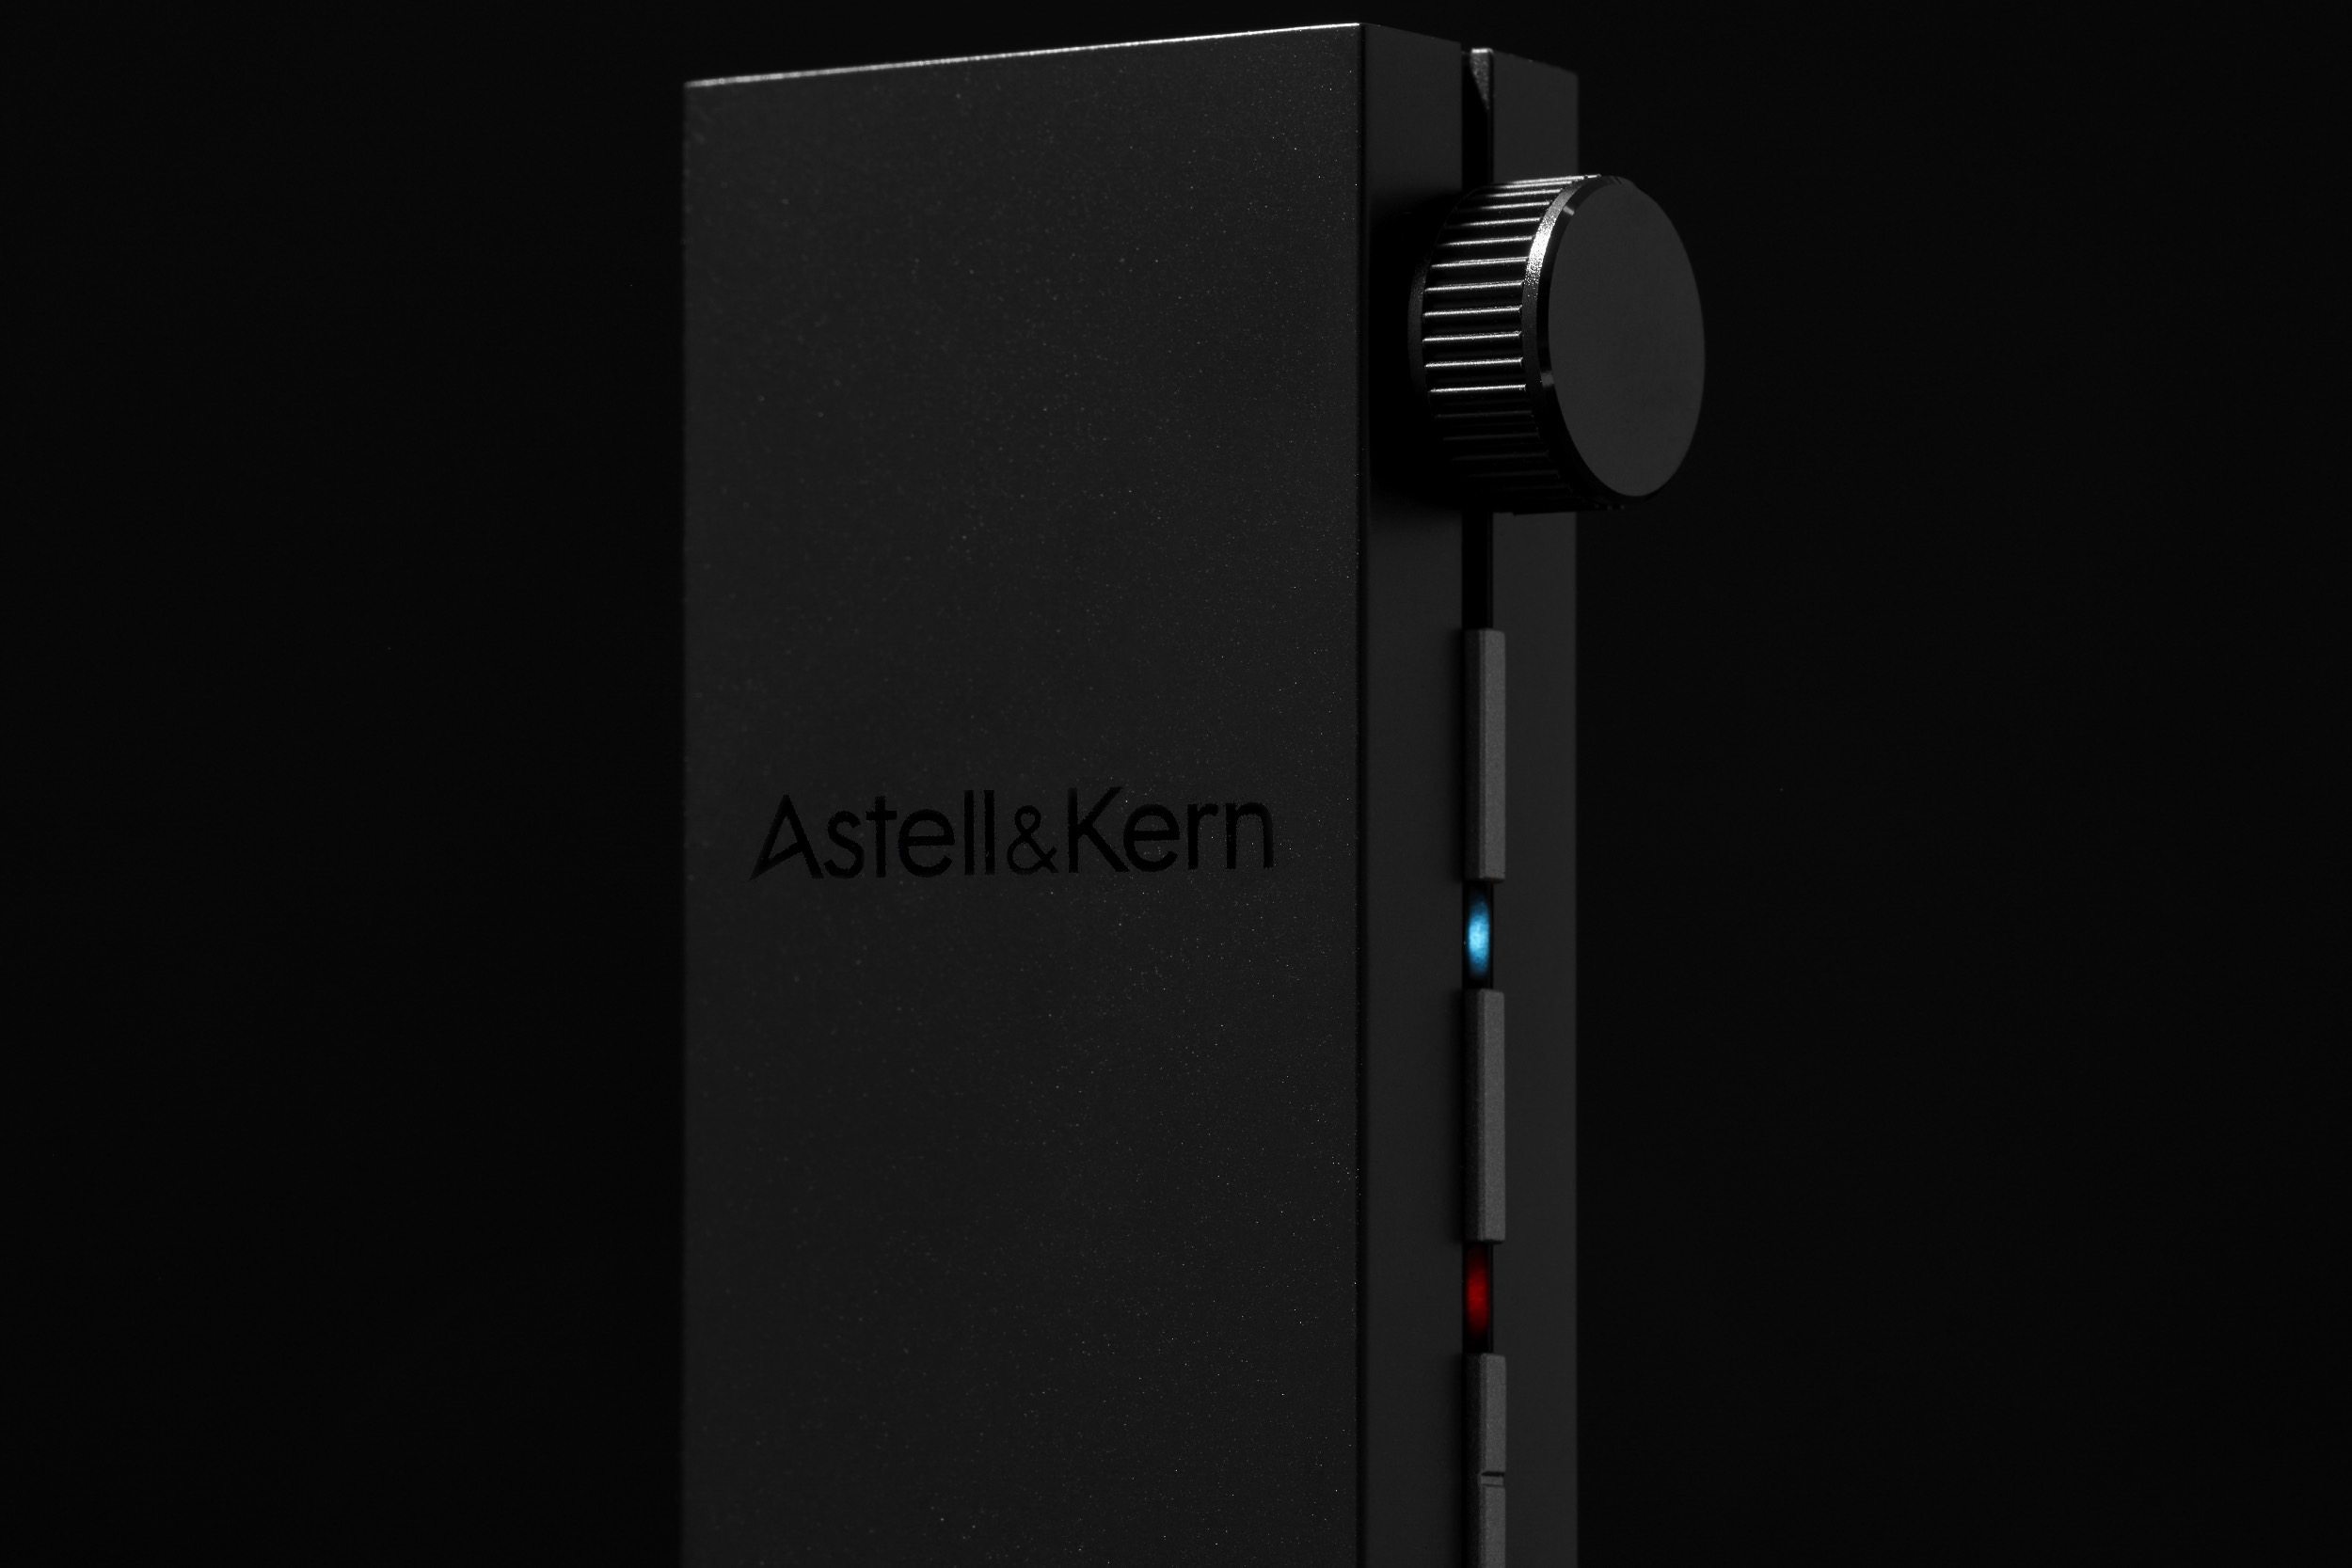 Astell&Kern's new headphone DAC is PlayStation-ready | Digital Trends